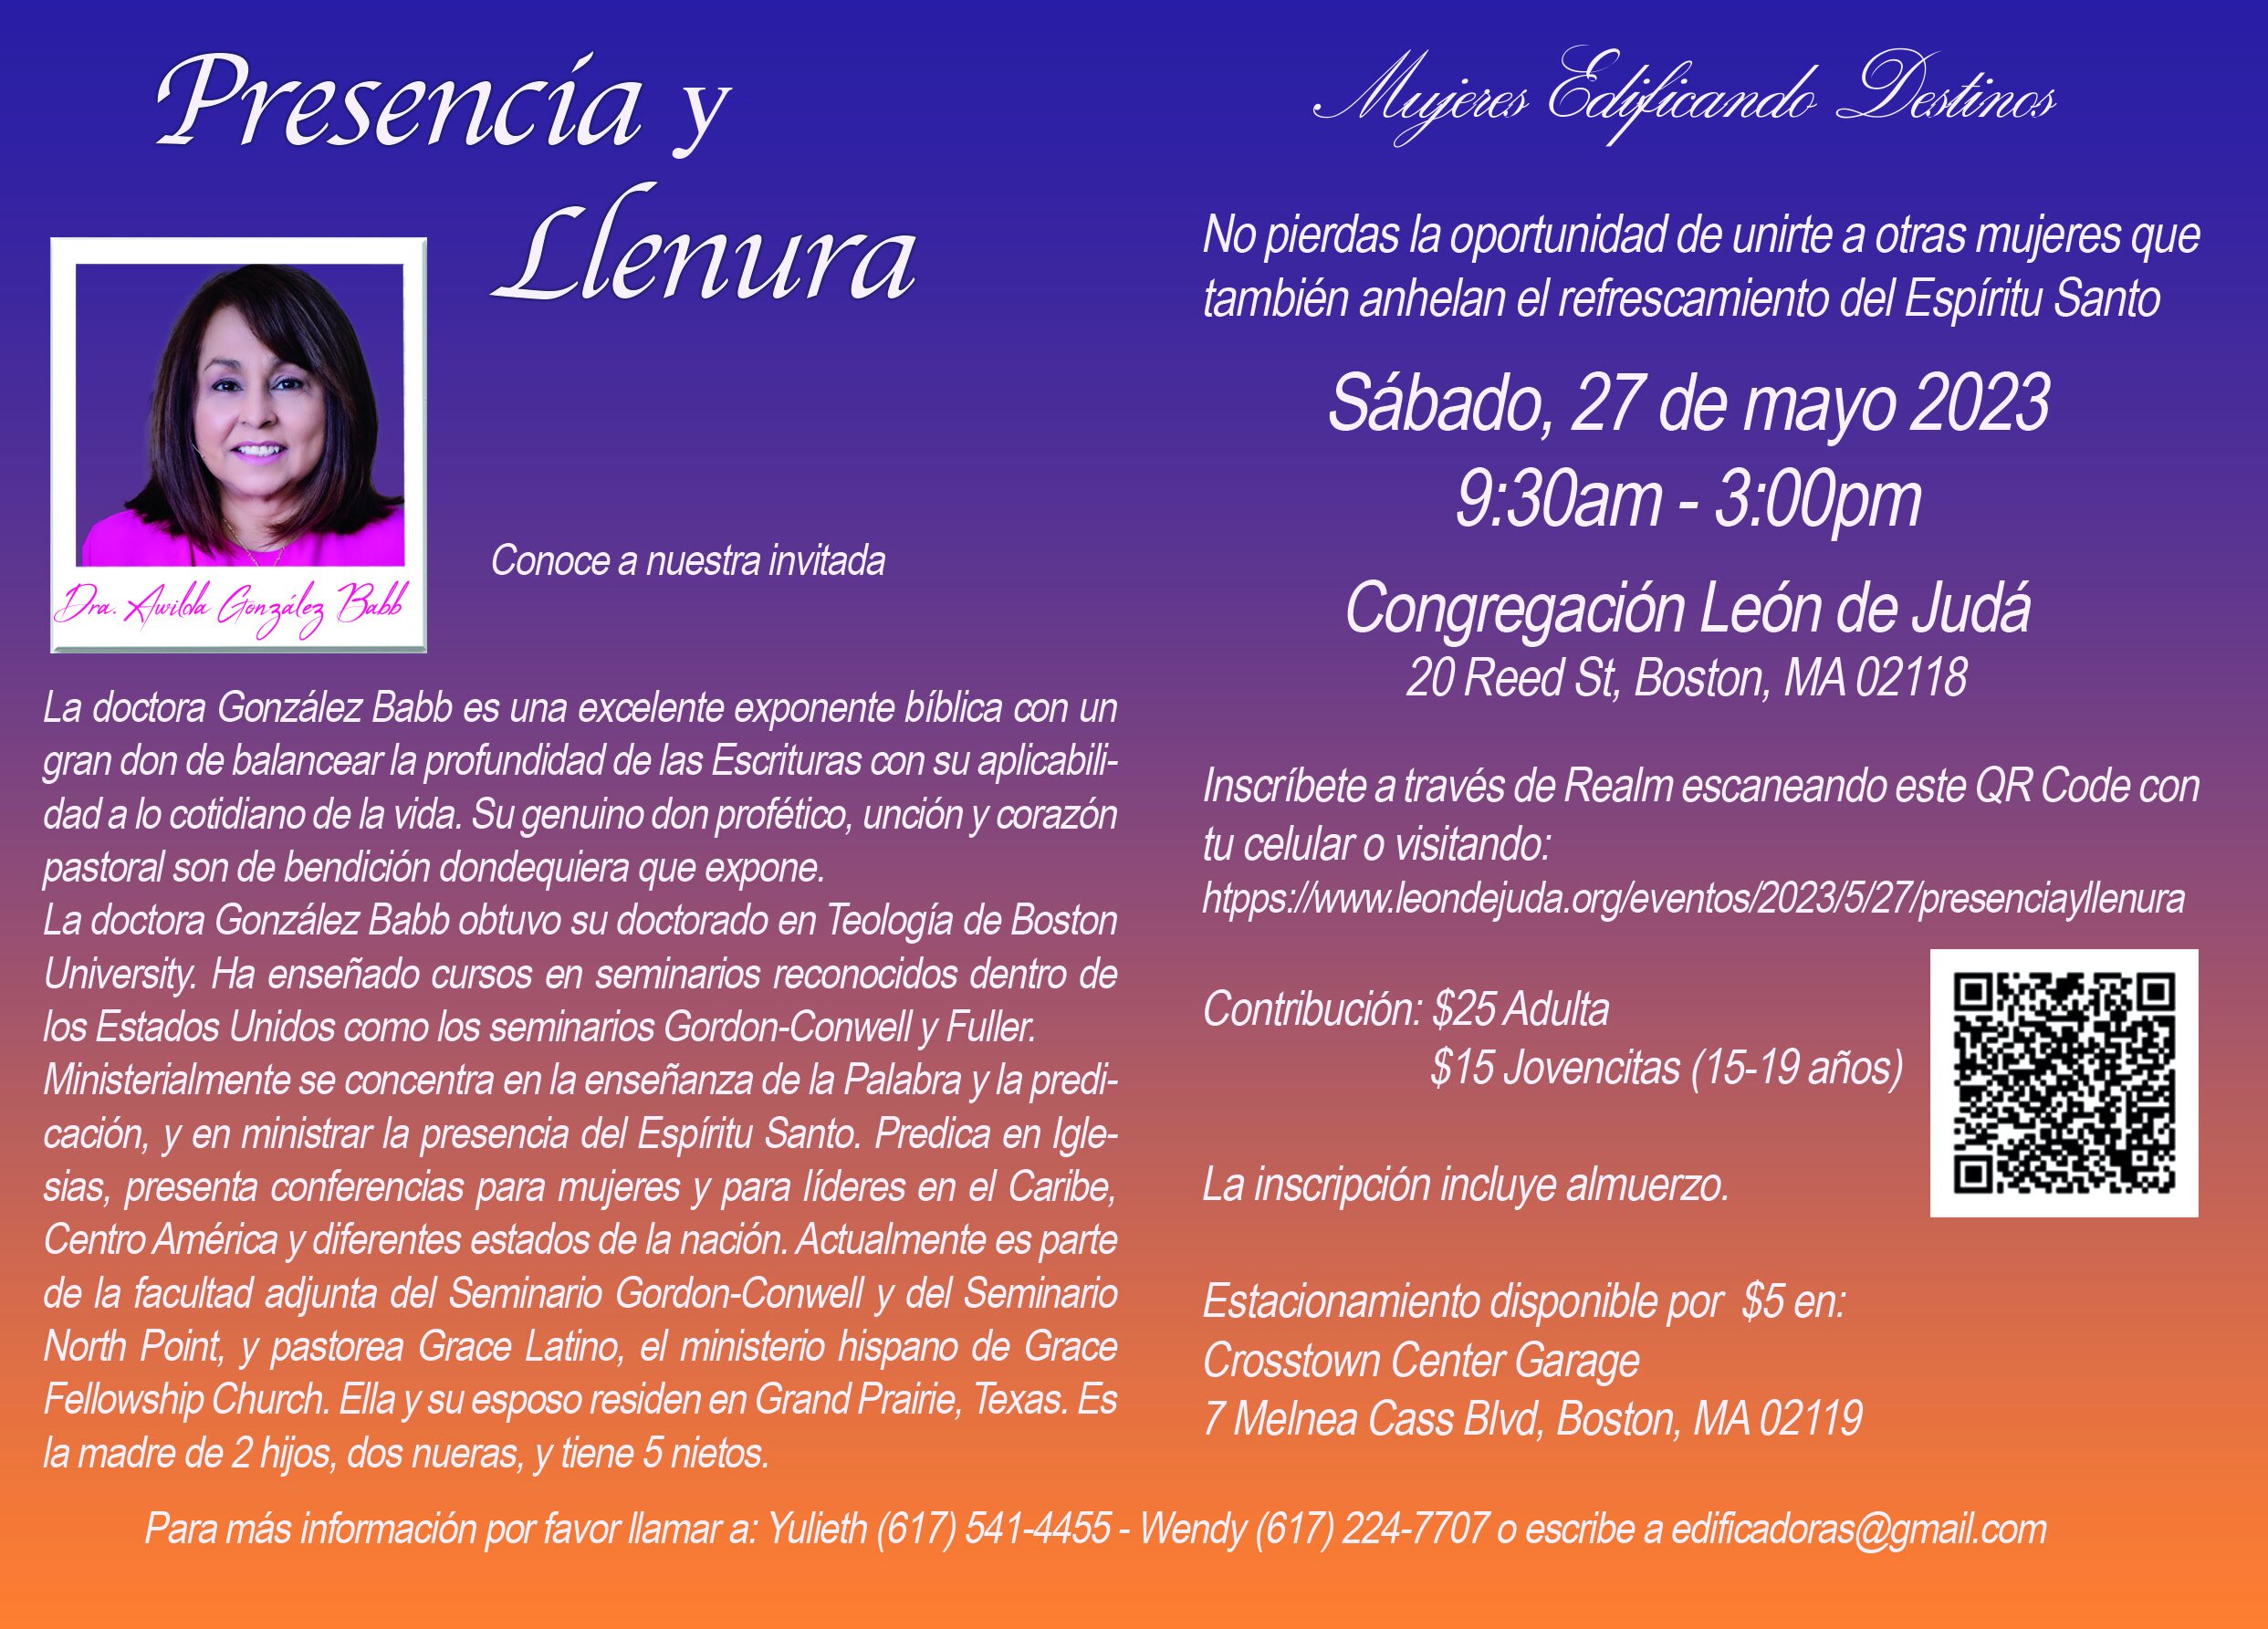 PRESENCIA Y LLENURA BACK postcard-5inx7in-h-8-Recovered.jpg